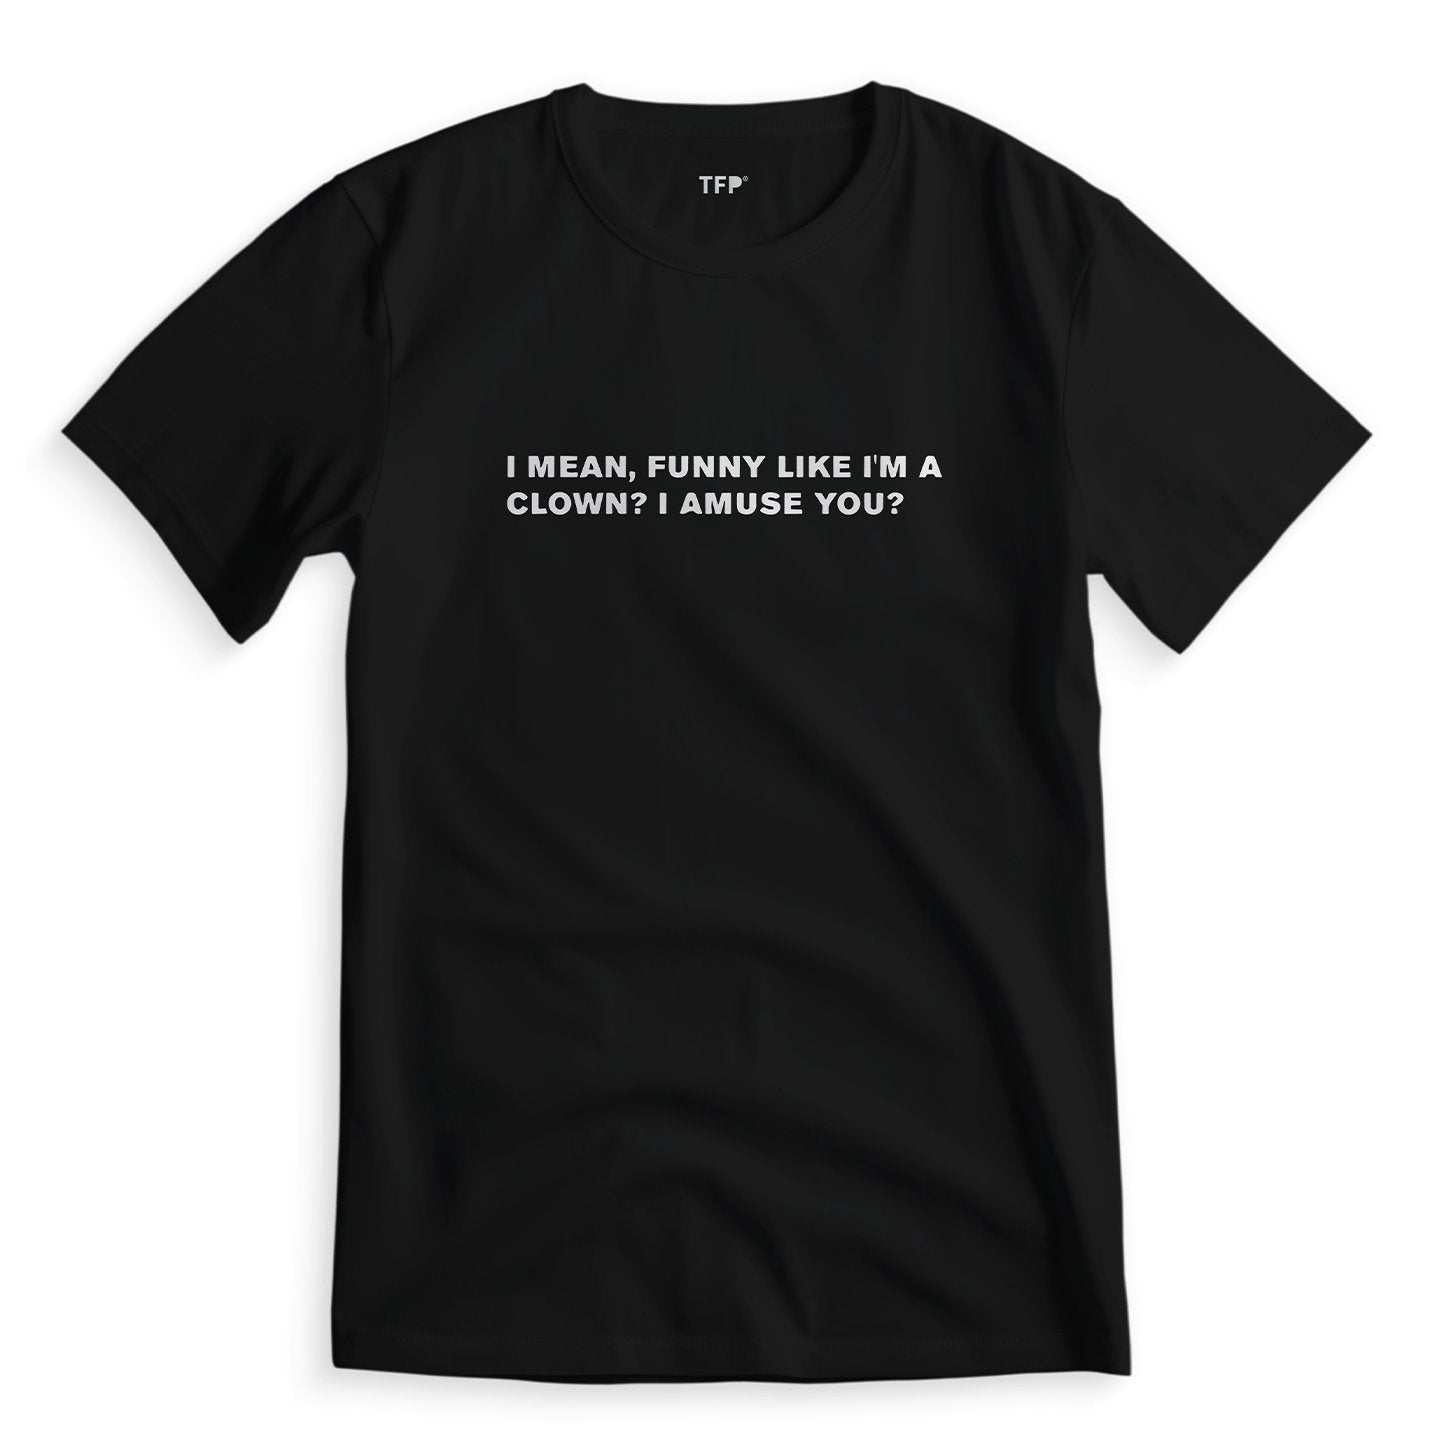 I amuse you? - T-Shirt